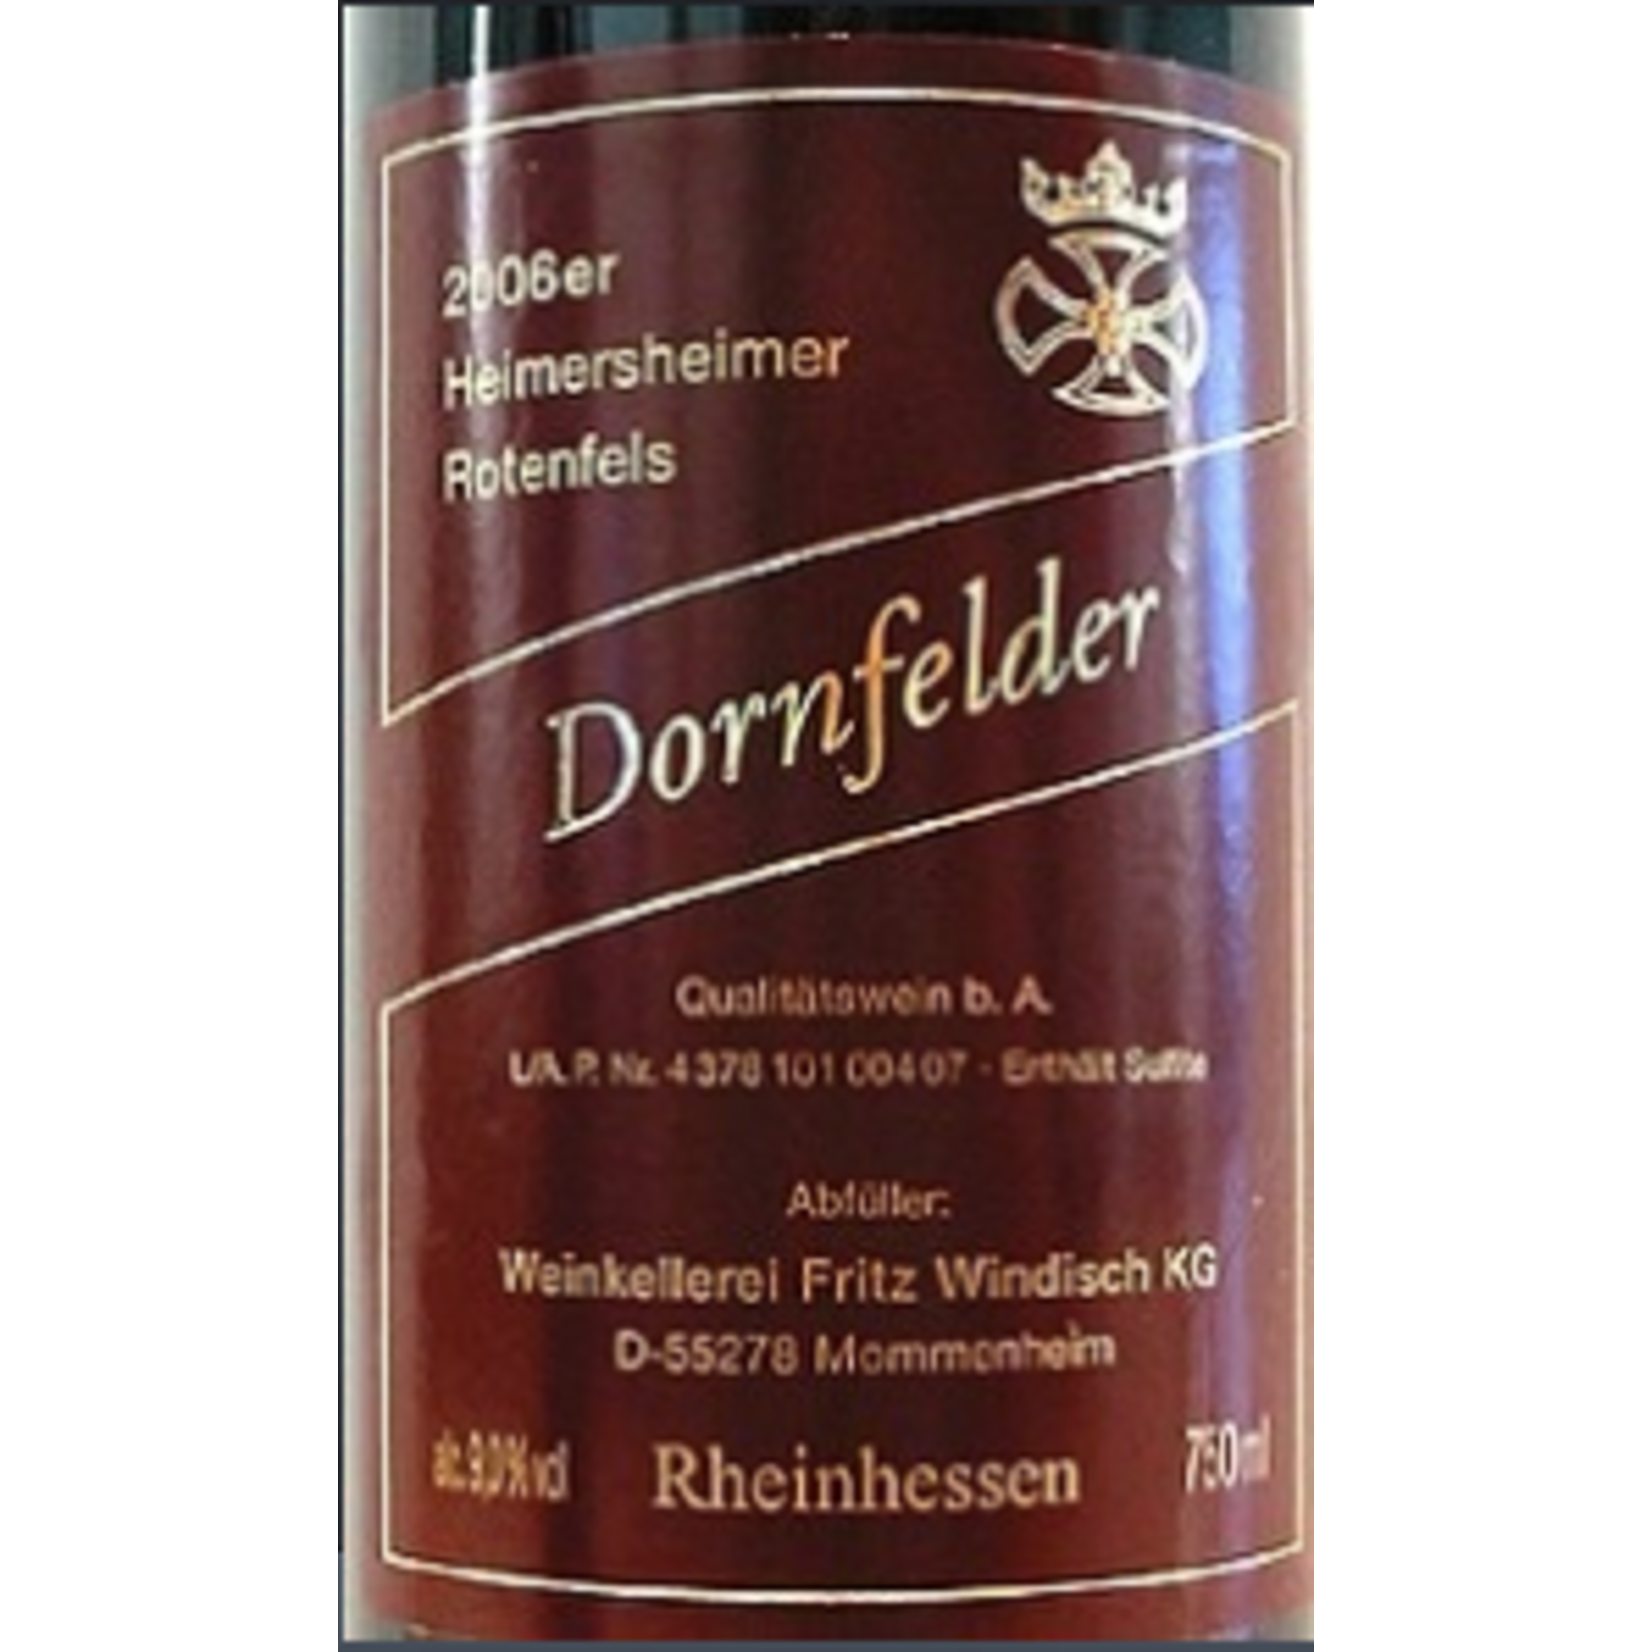 Dornfelder Rheinhessen Dornfelder Heimersheimer Rotenfels Rheinhessen 2022  Germany